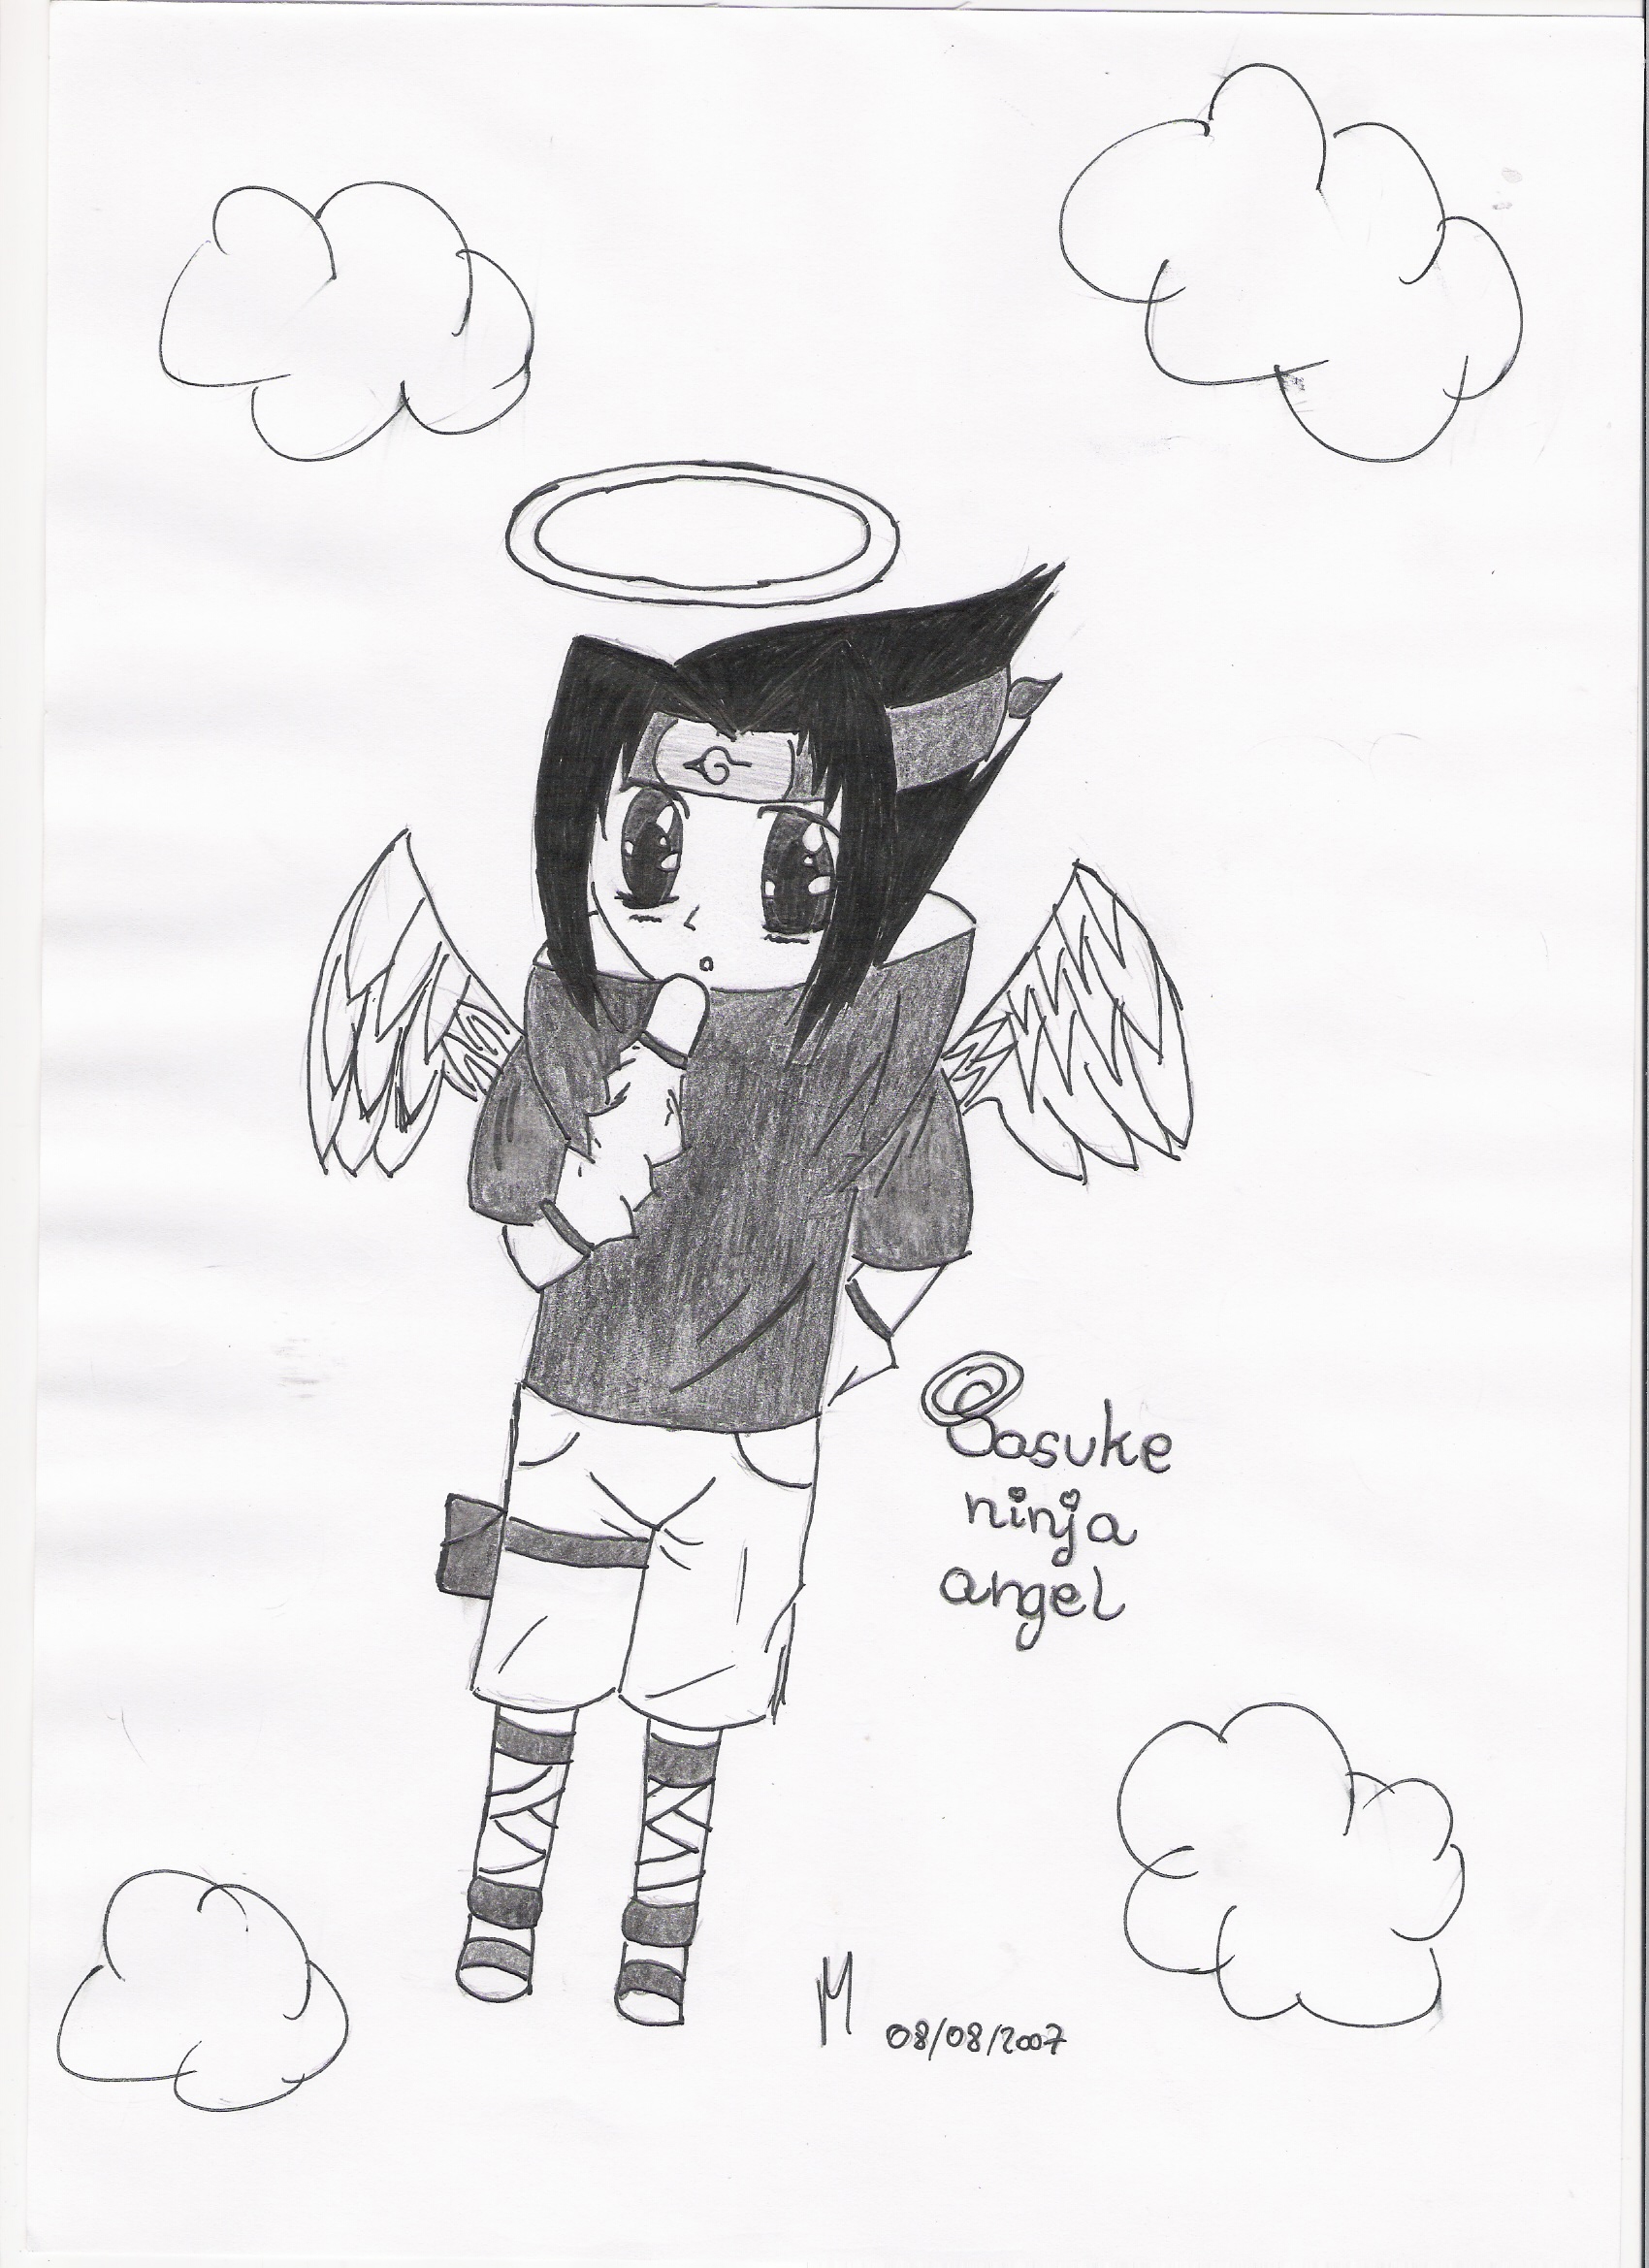 Sasuke ninja angel by bonebraker